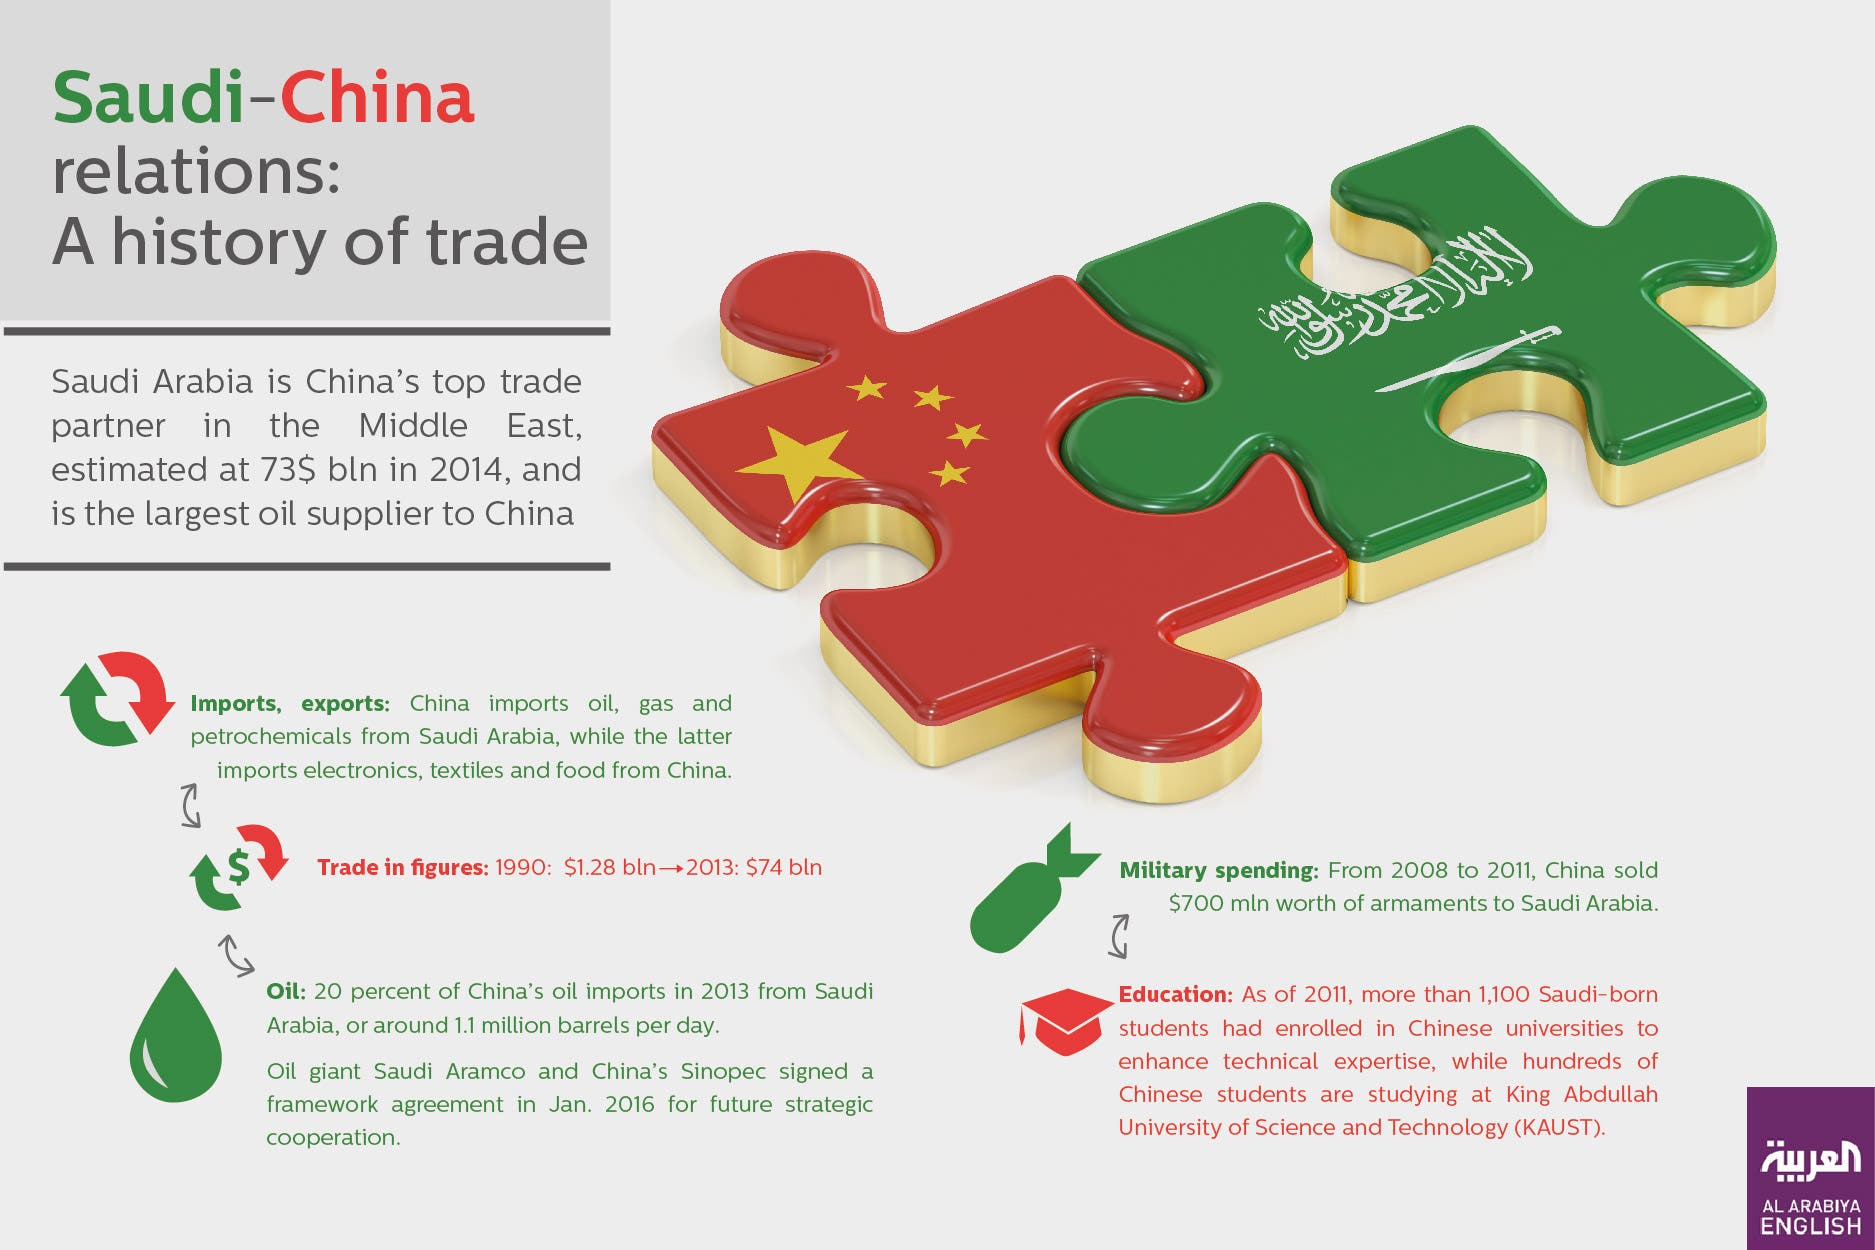 Saudi-China relations: A history of trade